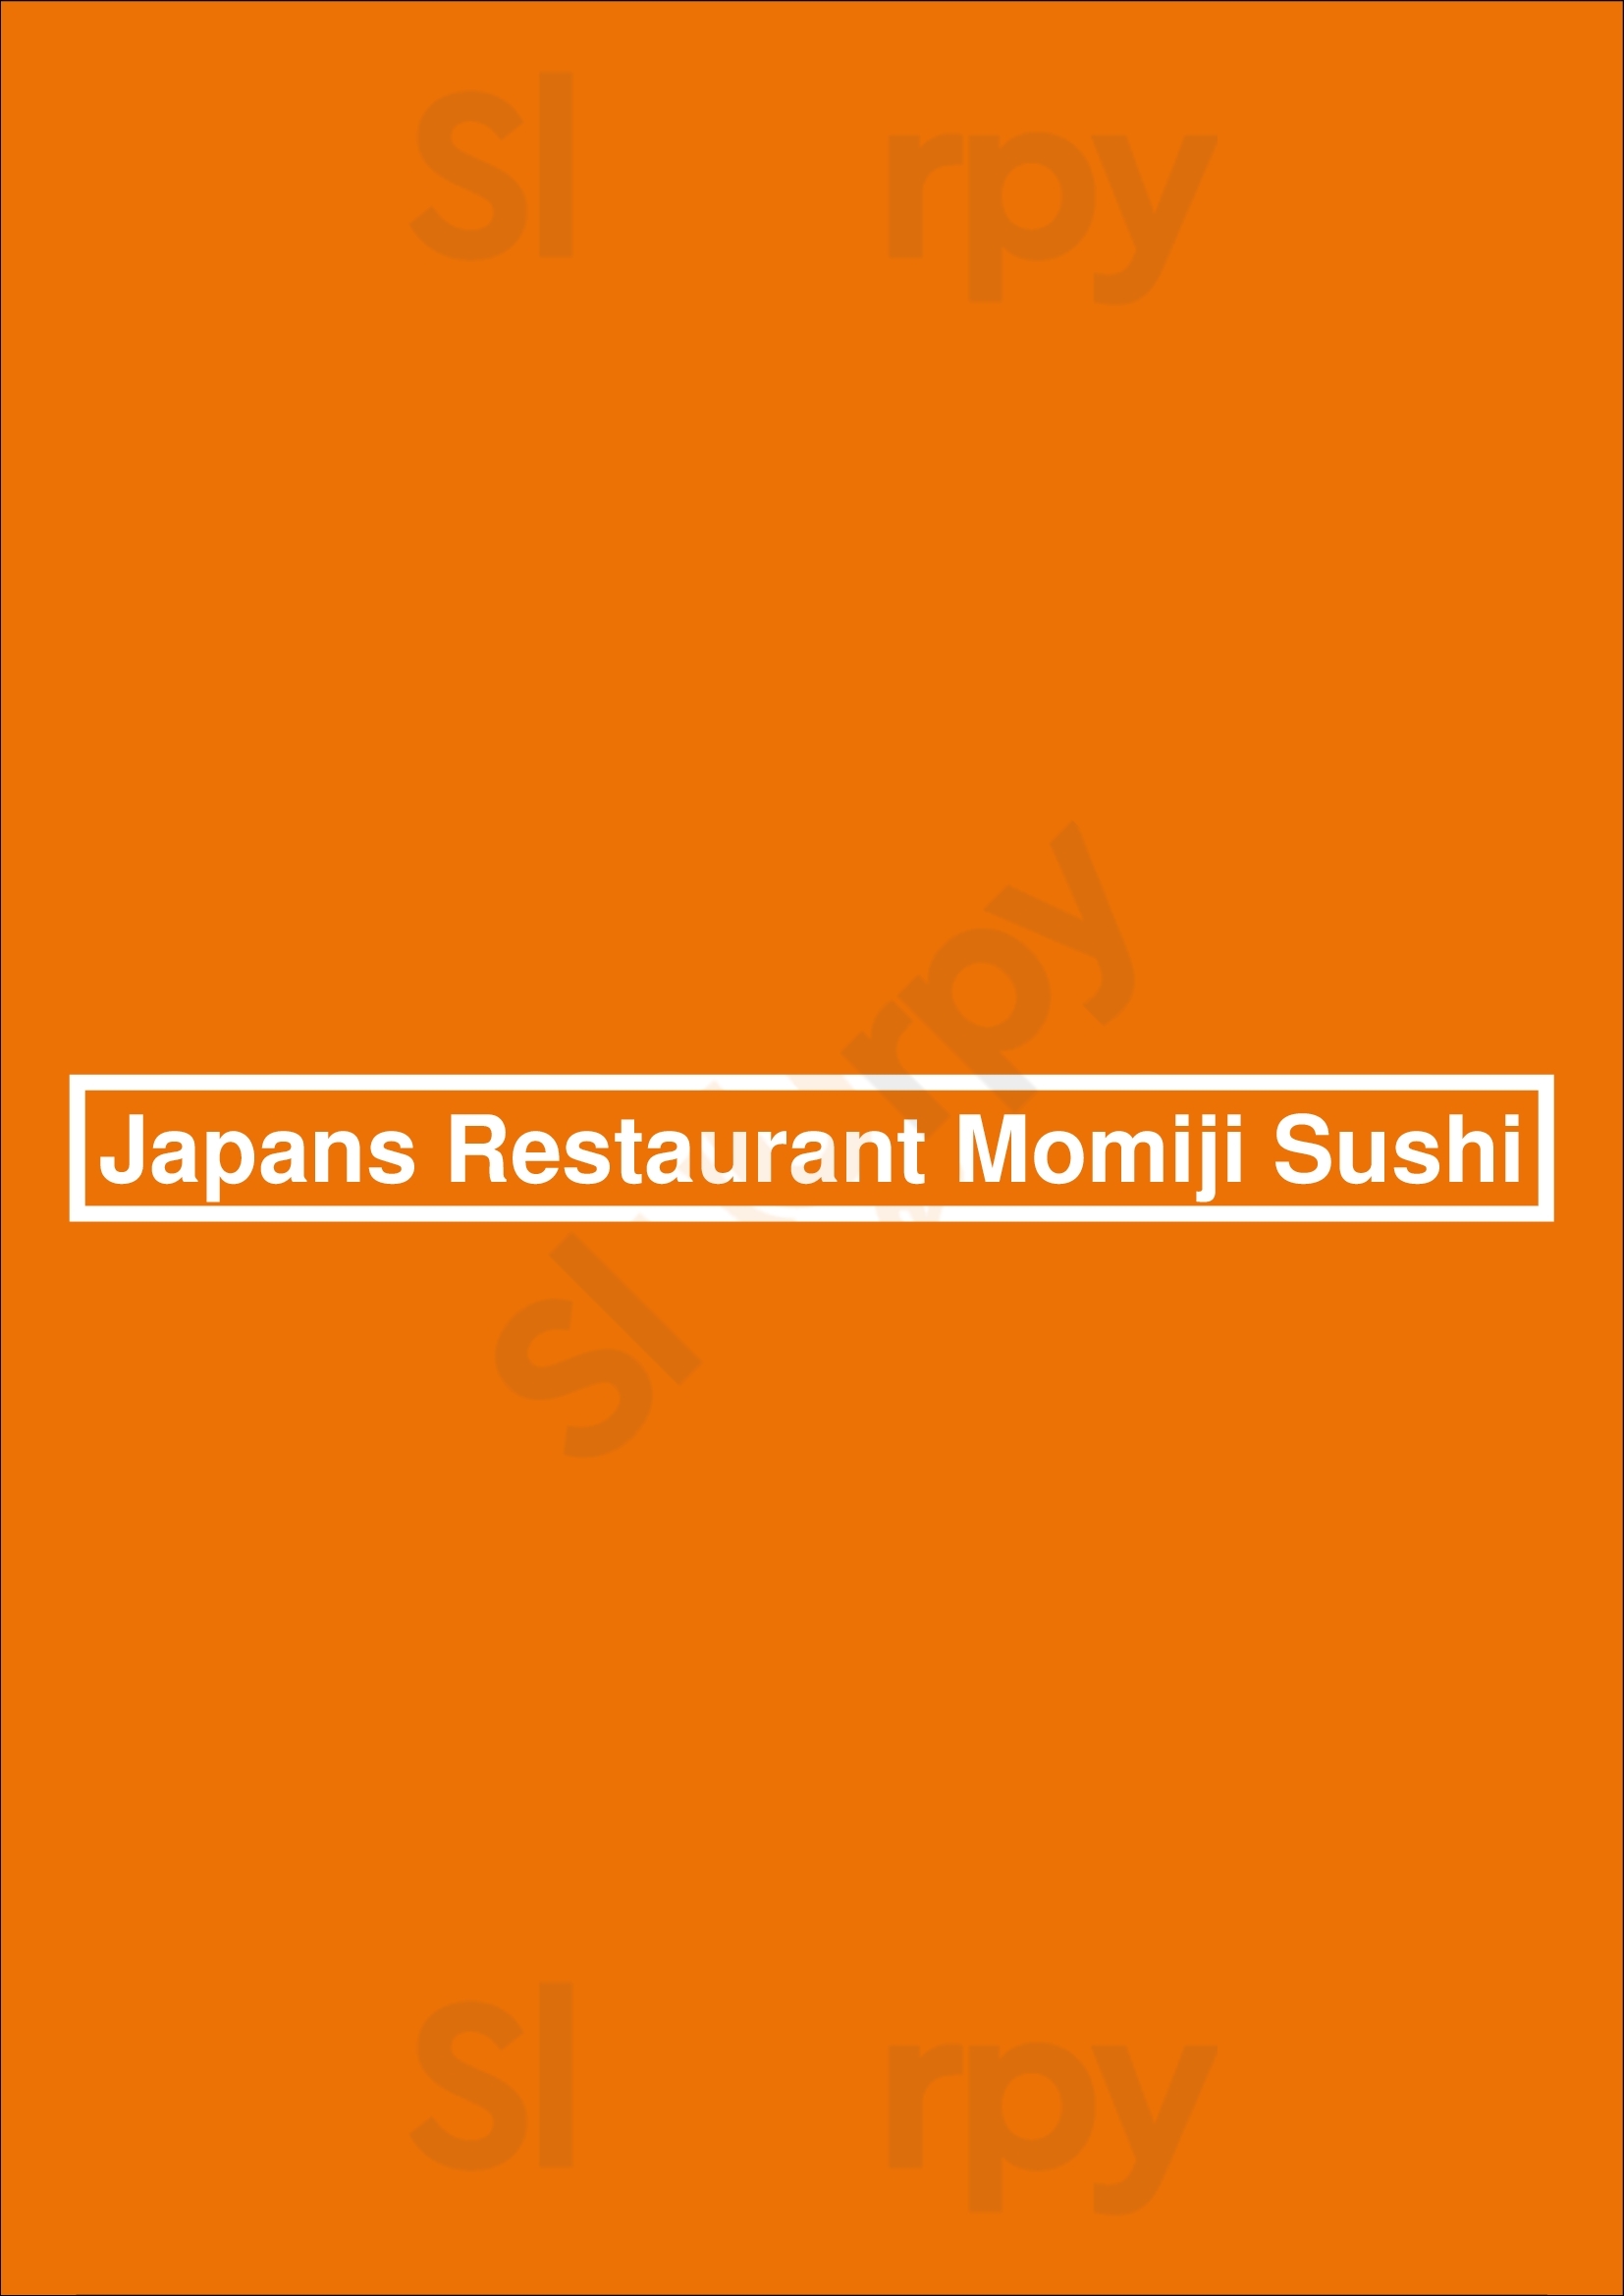 Japans Restaurant Momiji Sushi Den Haag Menu - 1